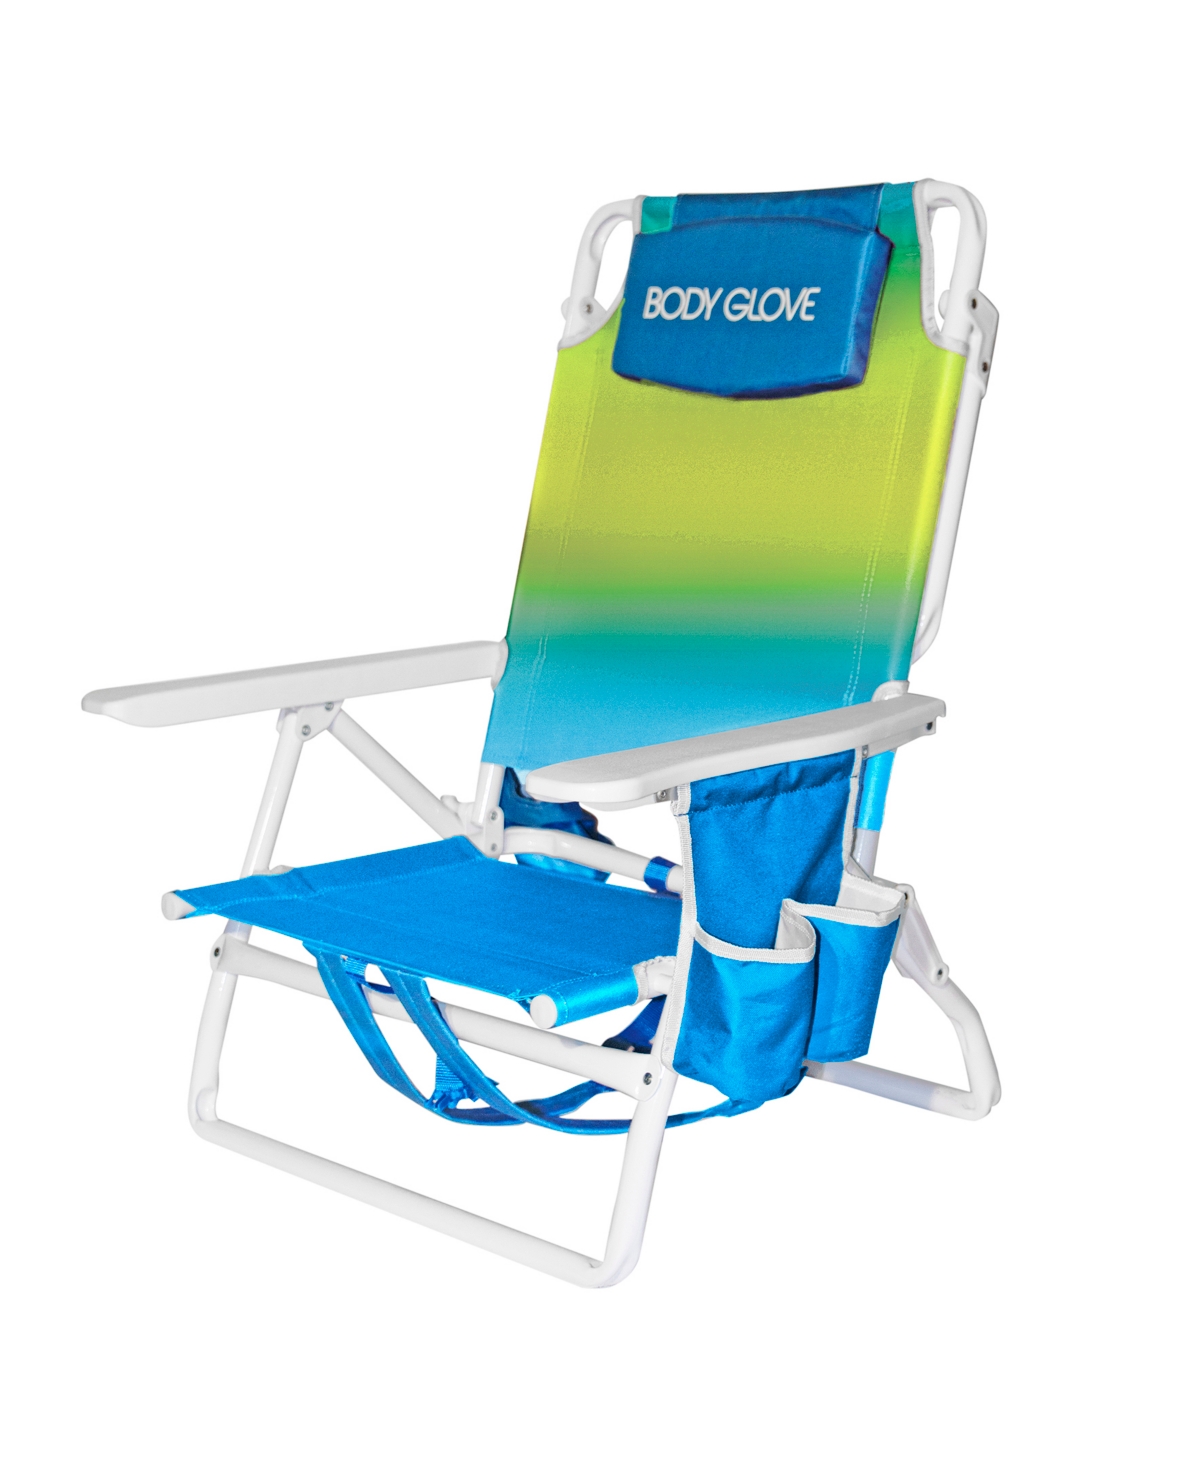 Body Glove 5 Position Beach Chair